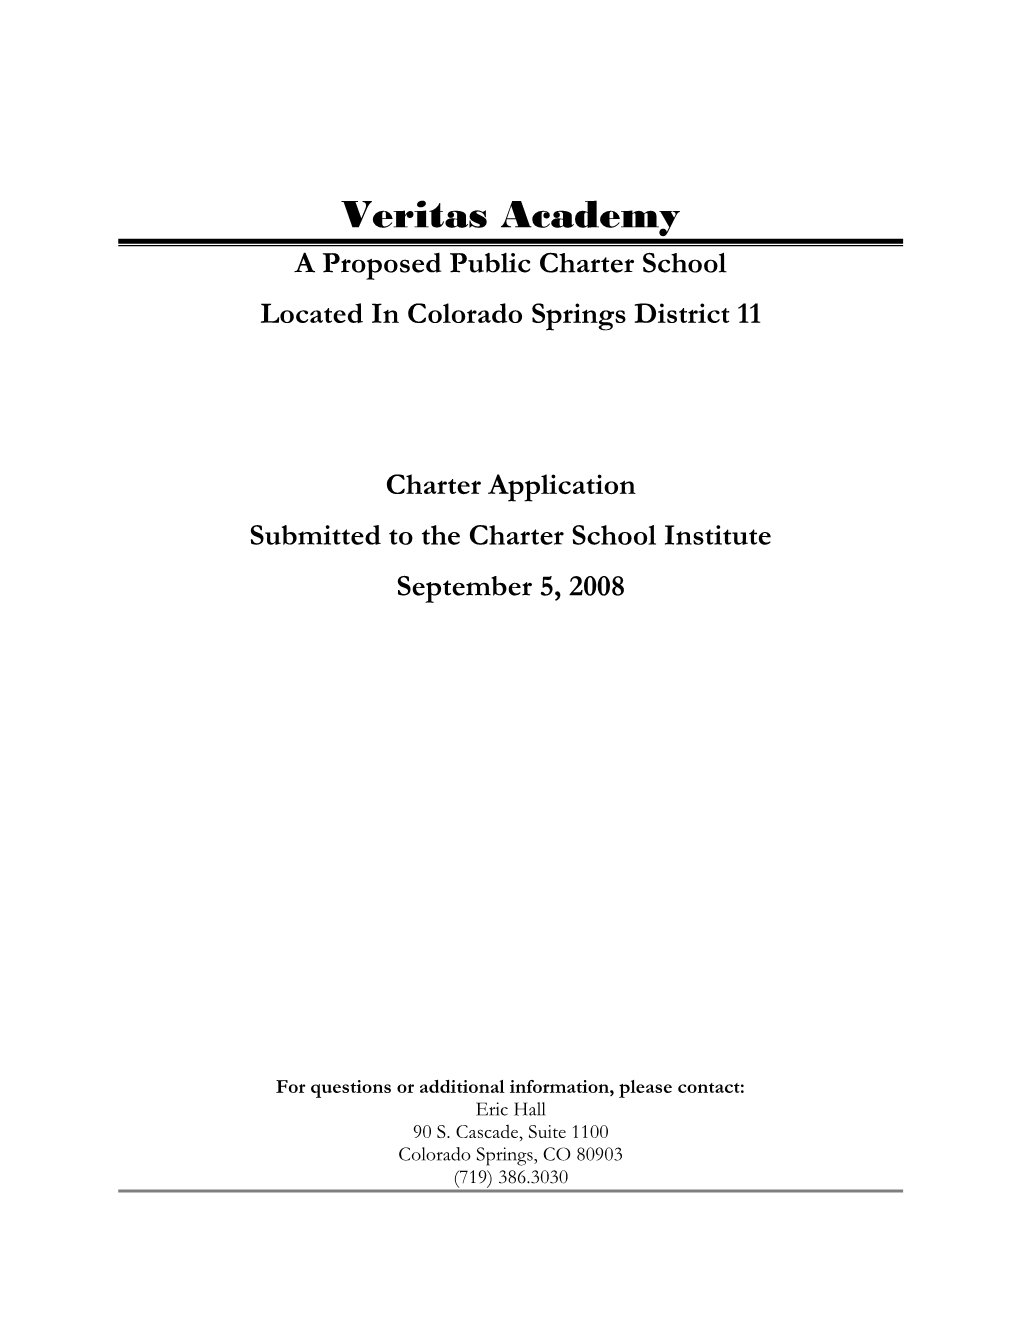 Veritas Academy Charter Application